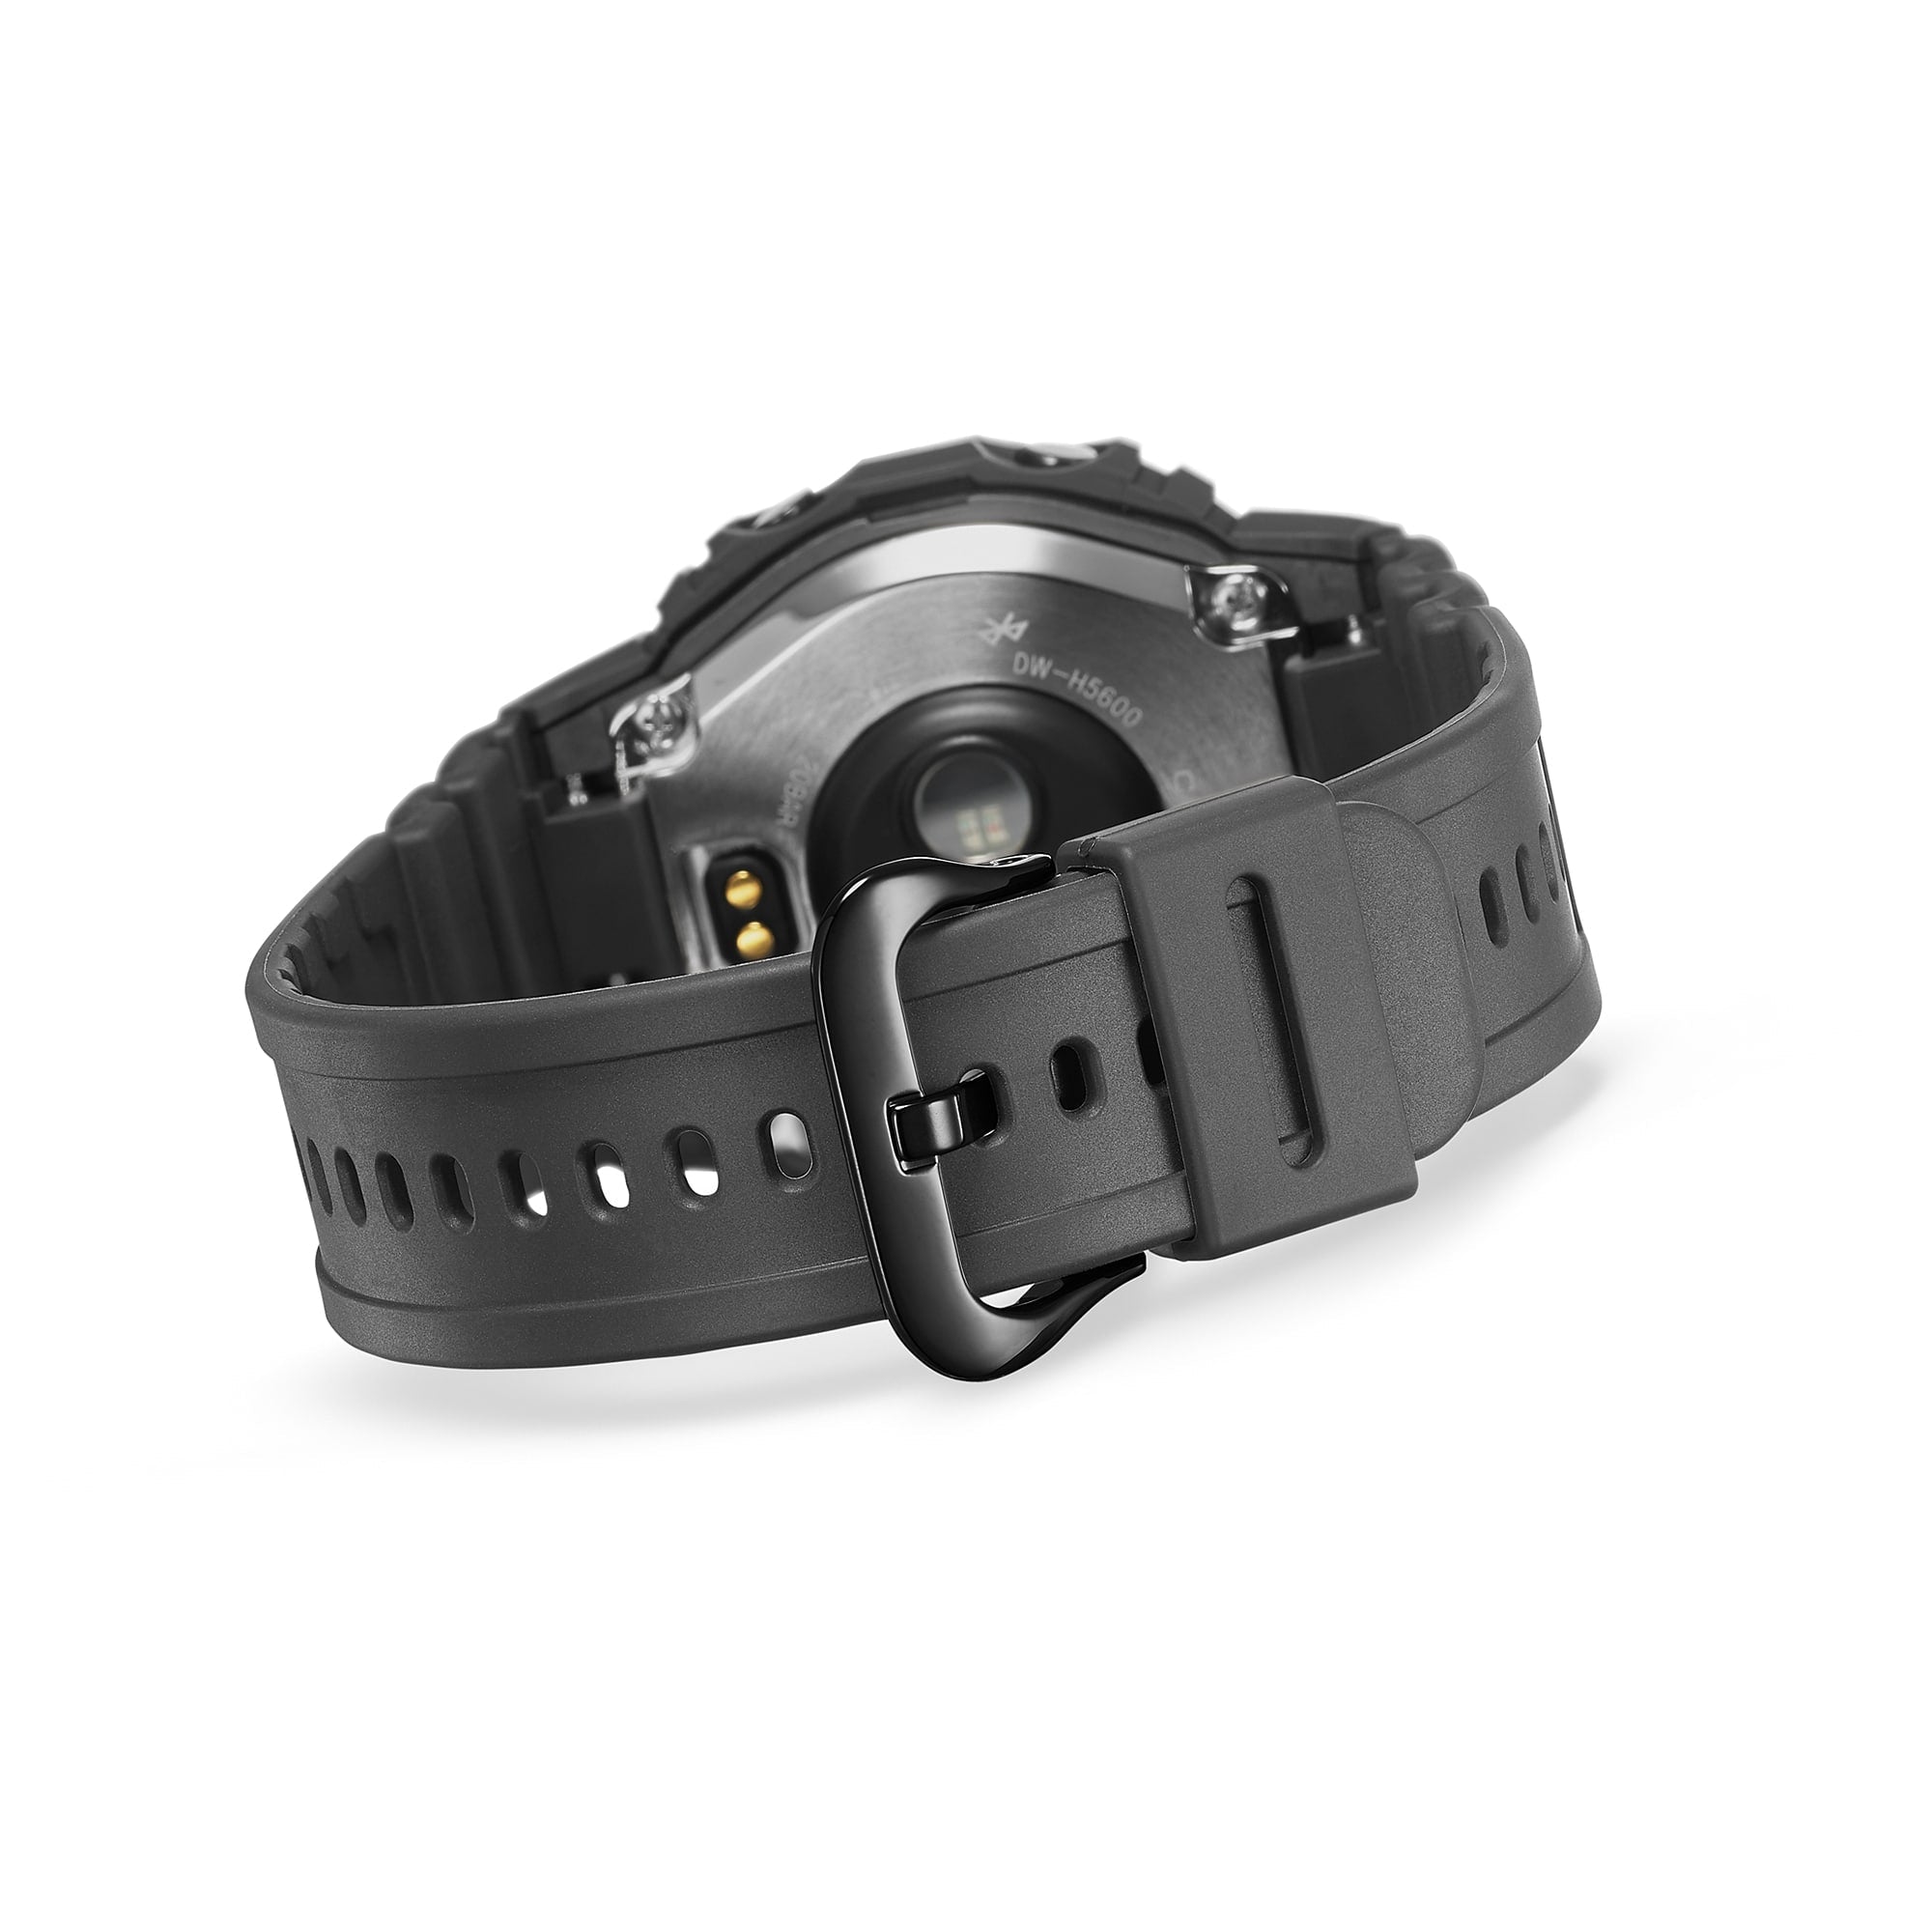 Casio Men's Watch G-shock Digital G Shock DW-5600bb-1 DW5600 Dw-5600 200m  Sports